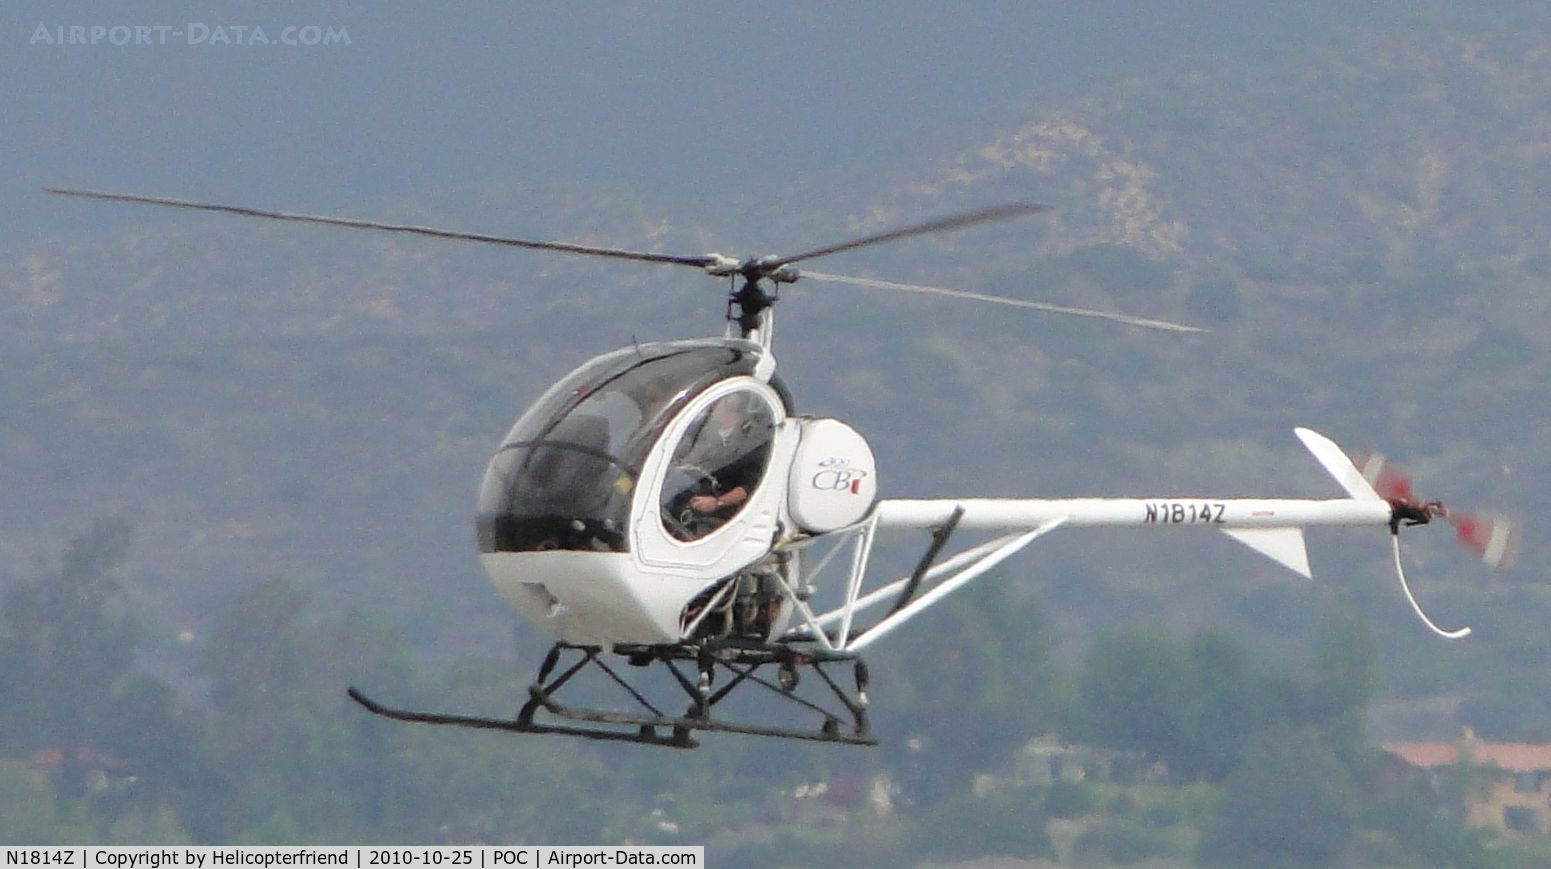 N1814Z, 2007 Schweizer 269C-1 C/N 0304, Entering northside helicopter pratice area north of runway 26R